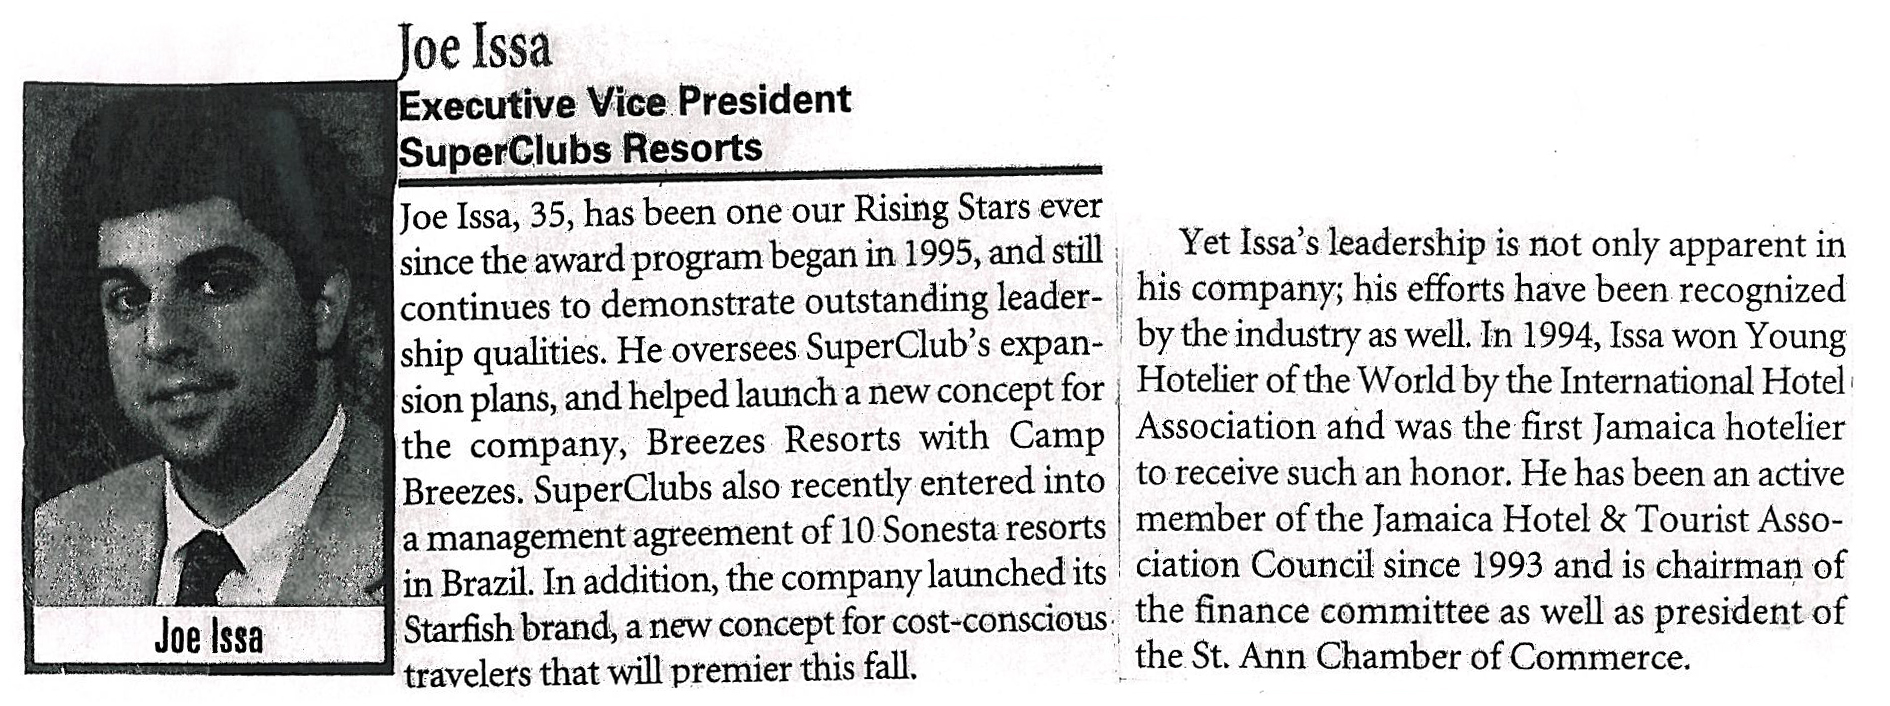 Joe Issa: Executive Vice President SuperClubs Resorts